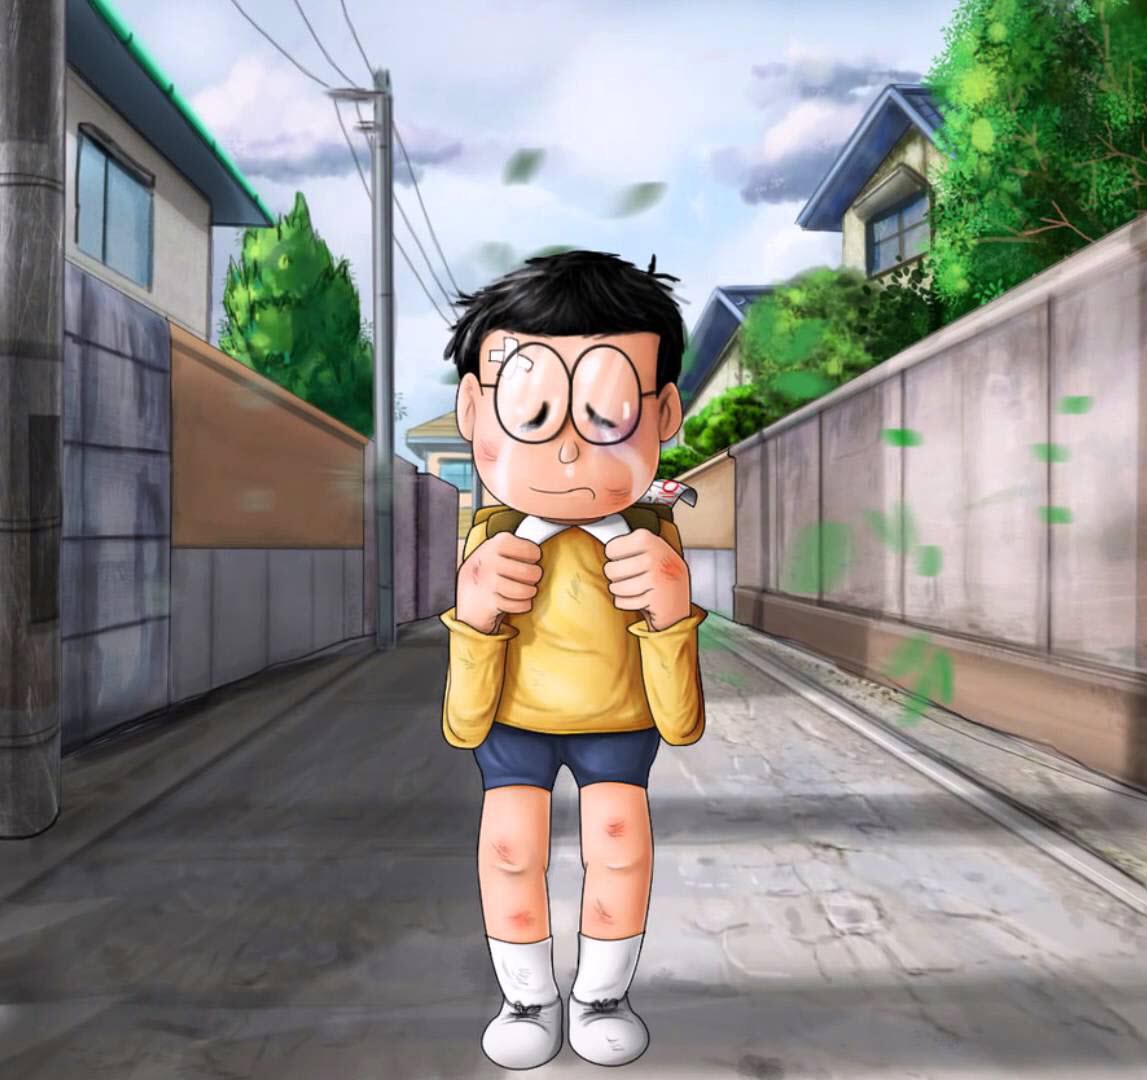 Hình ảnh 3D nobita buồn